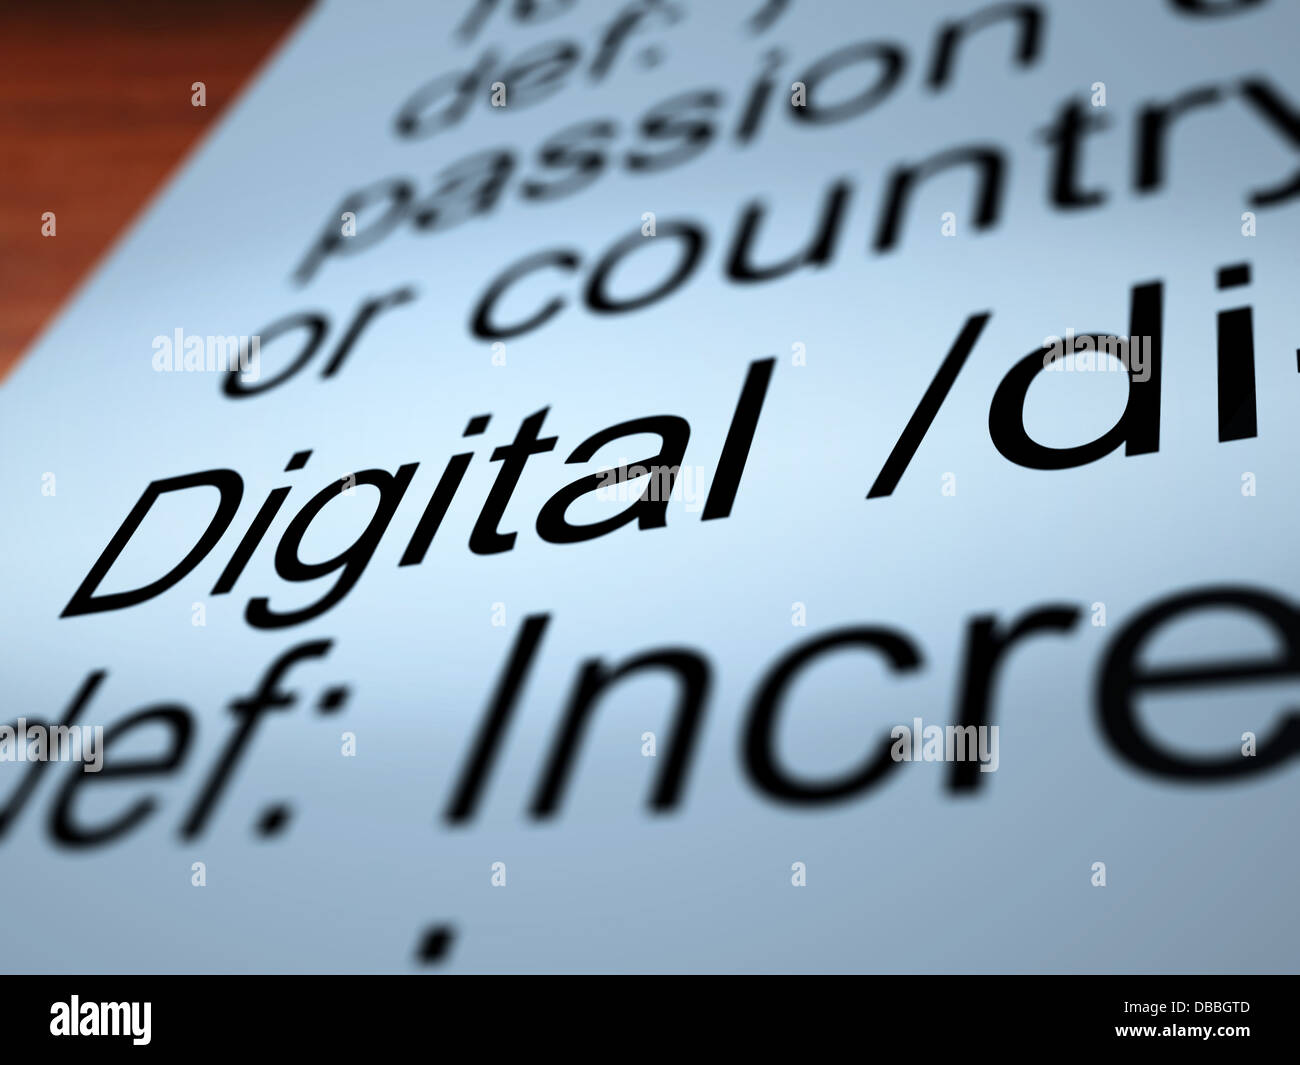 Digital Definition Closeup Showing Binary Values Stock Photo